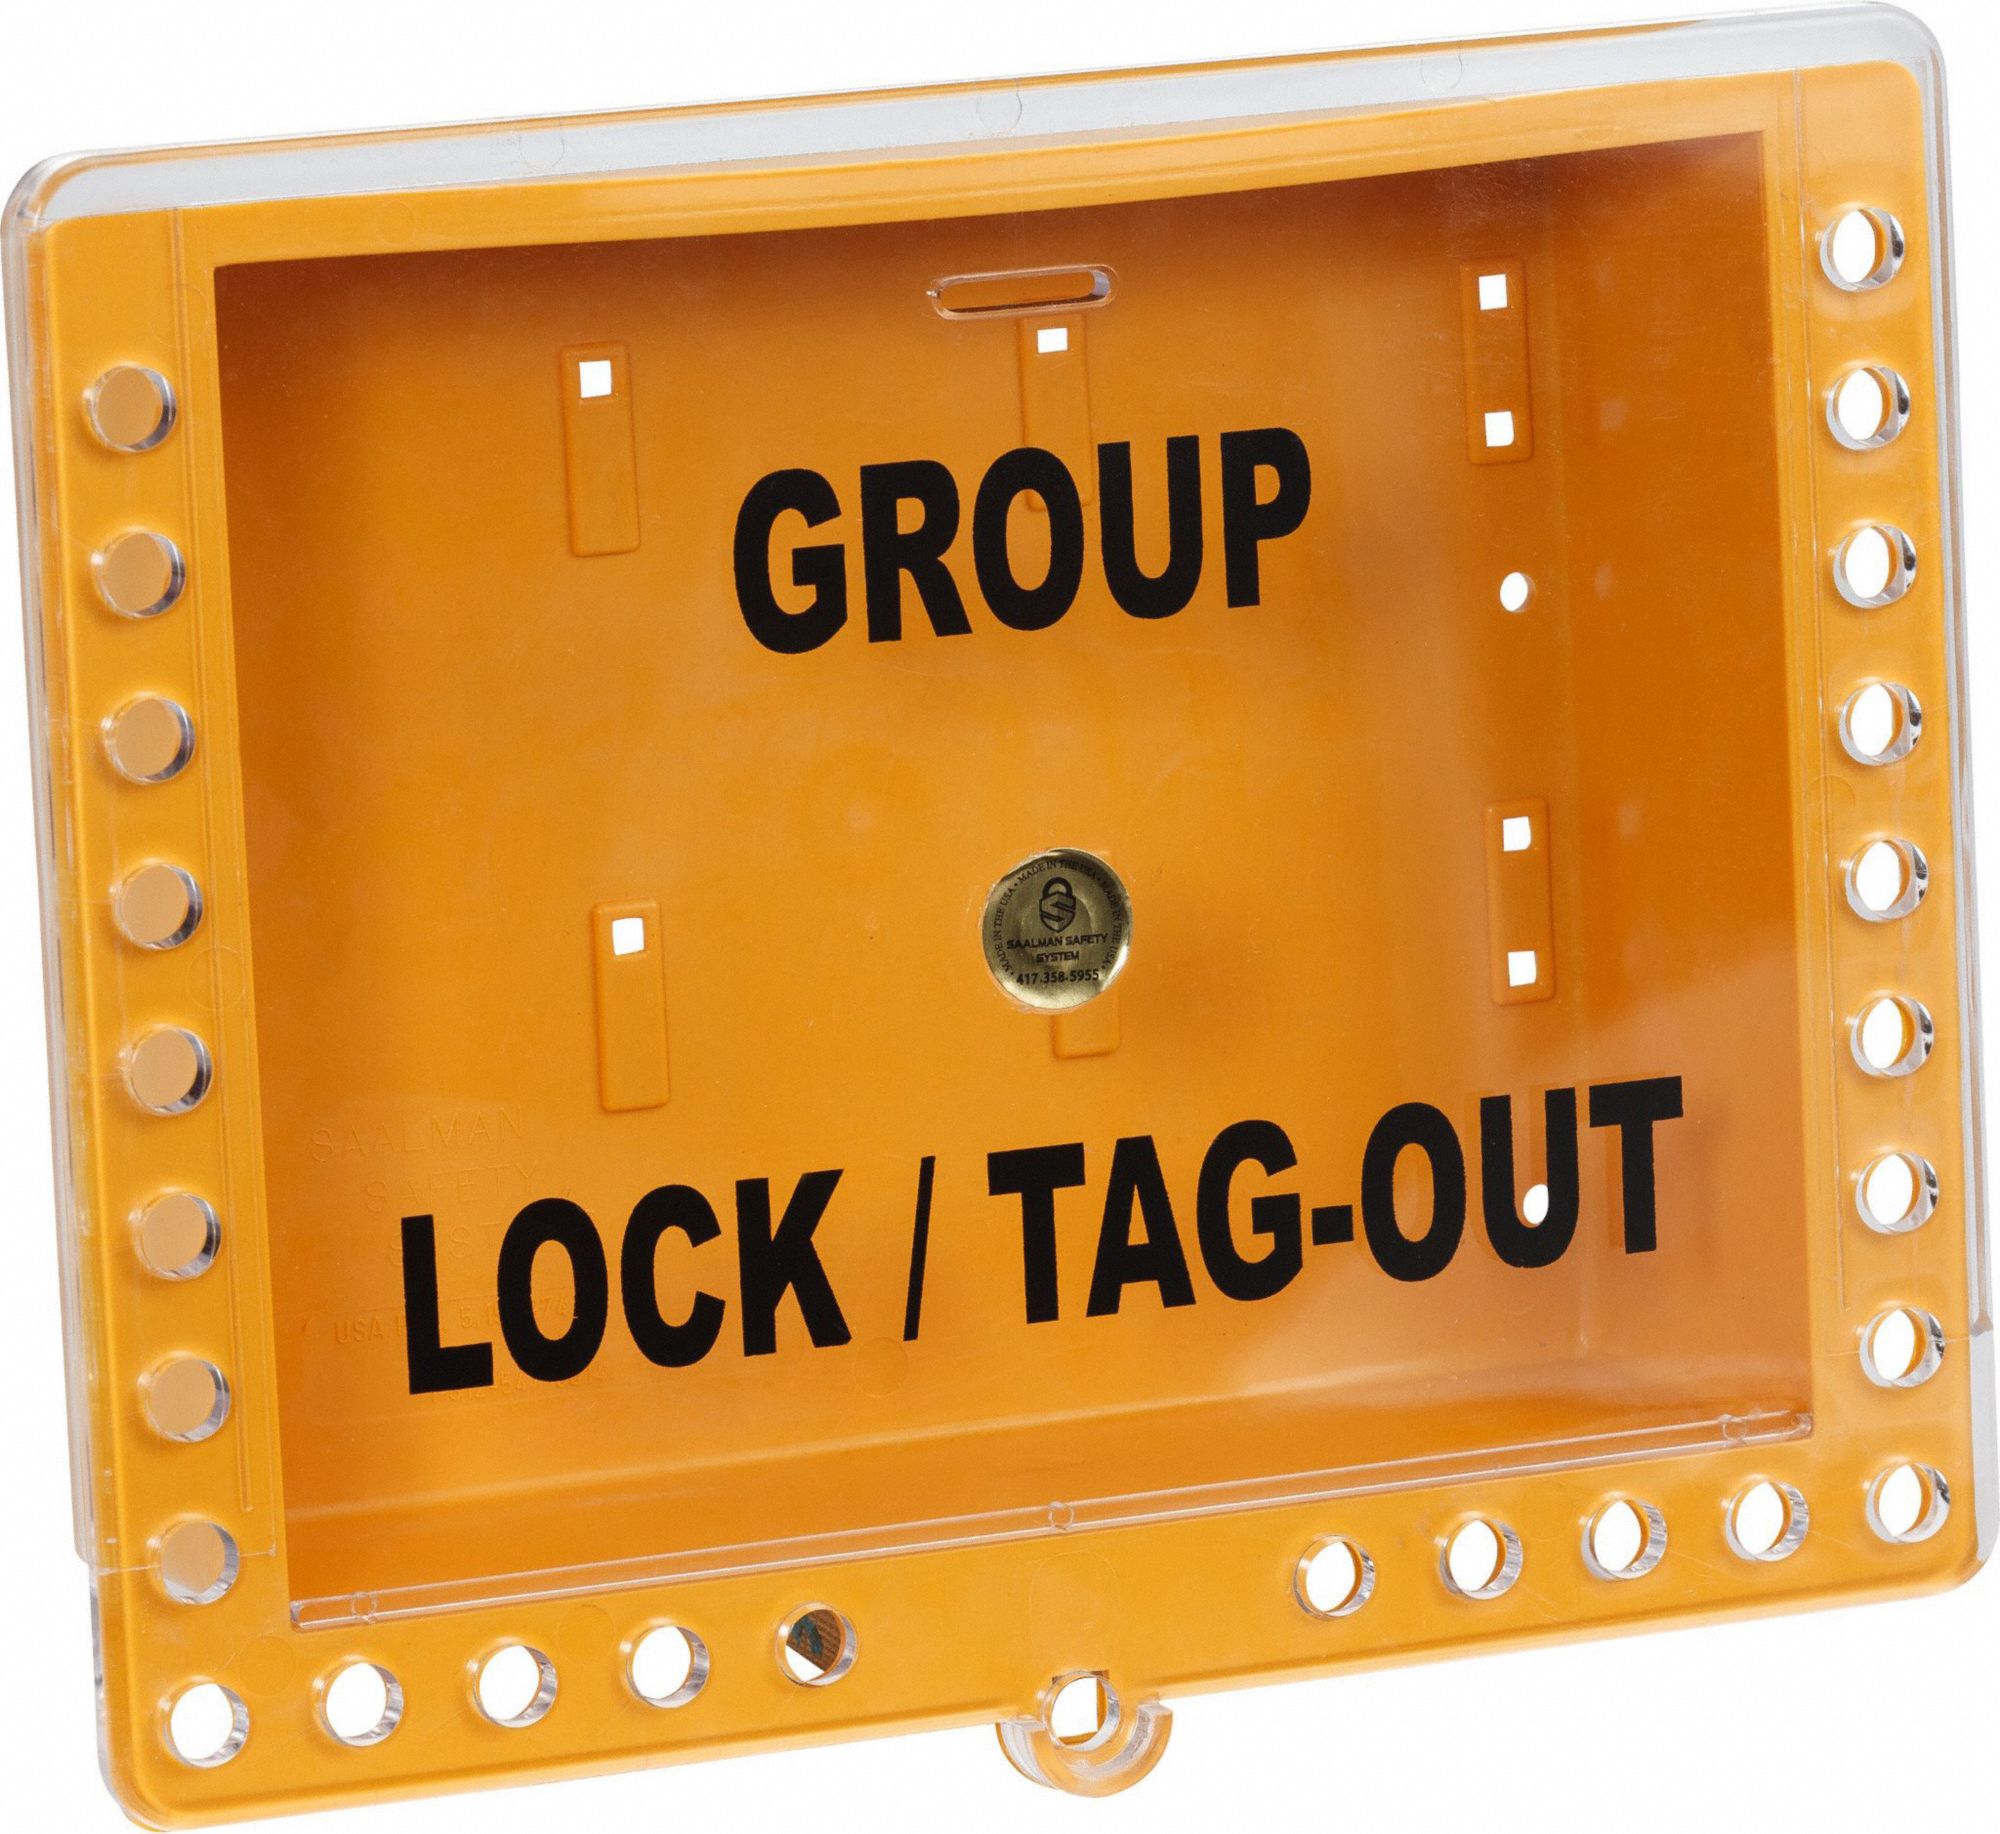 CONDOR, Plastic, Yellow, Group Lockout Box - 437R34|7389 - Grainger